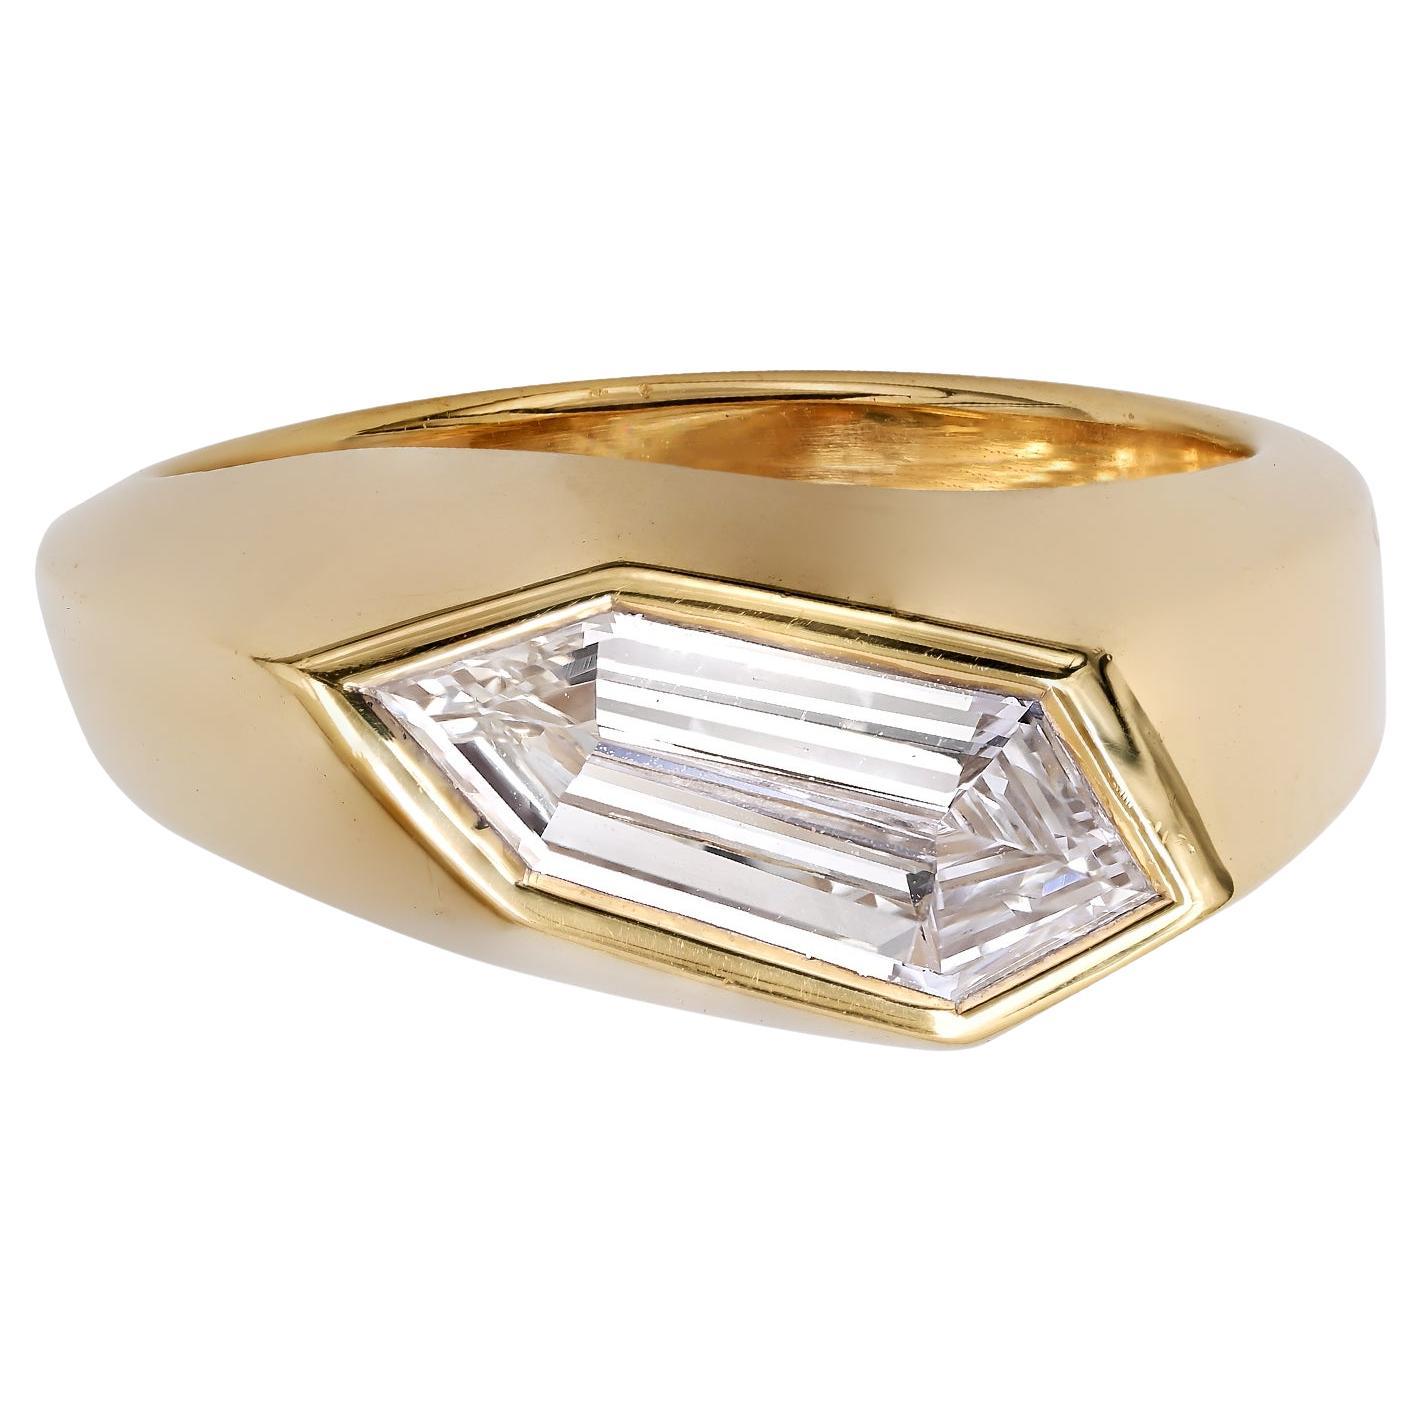 Spectra Fine Jewelry GIA Certified 1.50 Carat Diamond Ring